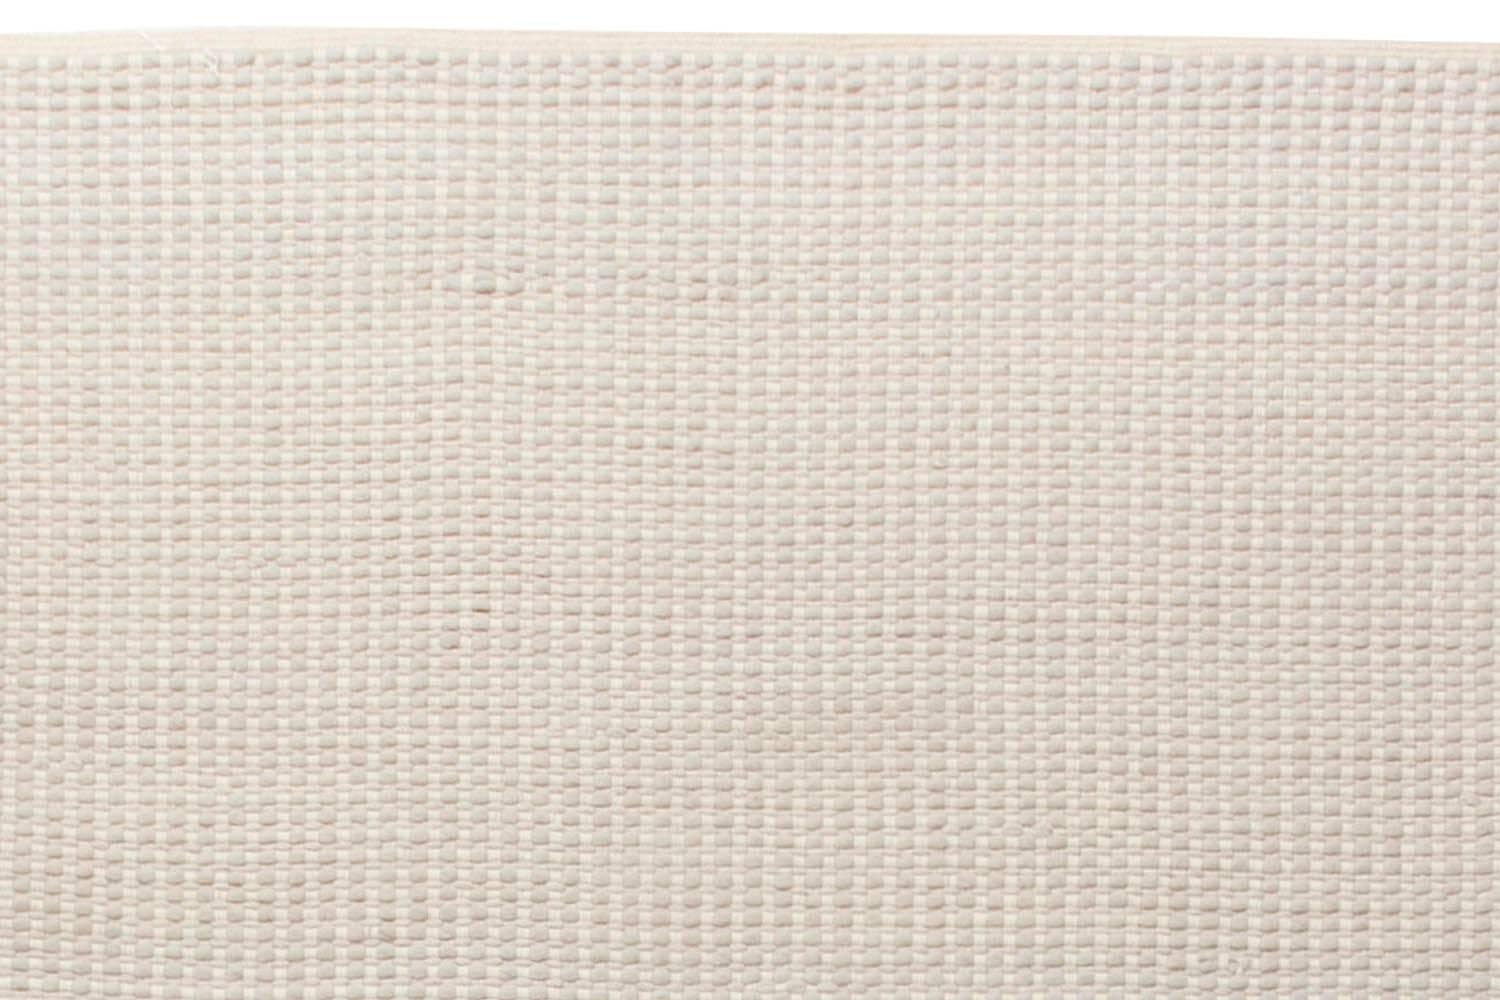 Hand-Woven High-Quality Modern Beige, Gray Flat-Weave Wool Rug by Doris Leslie Blau For Sale